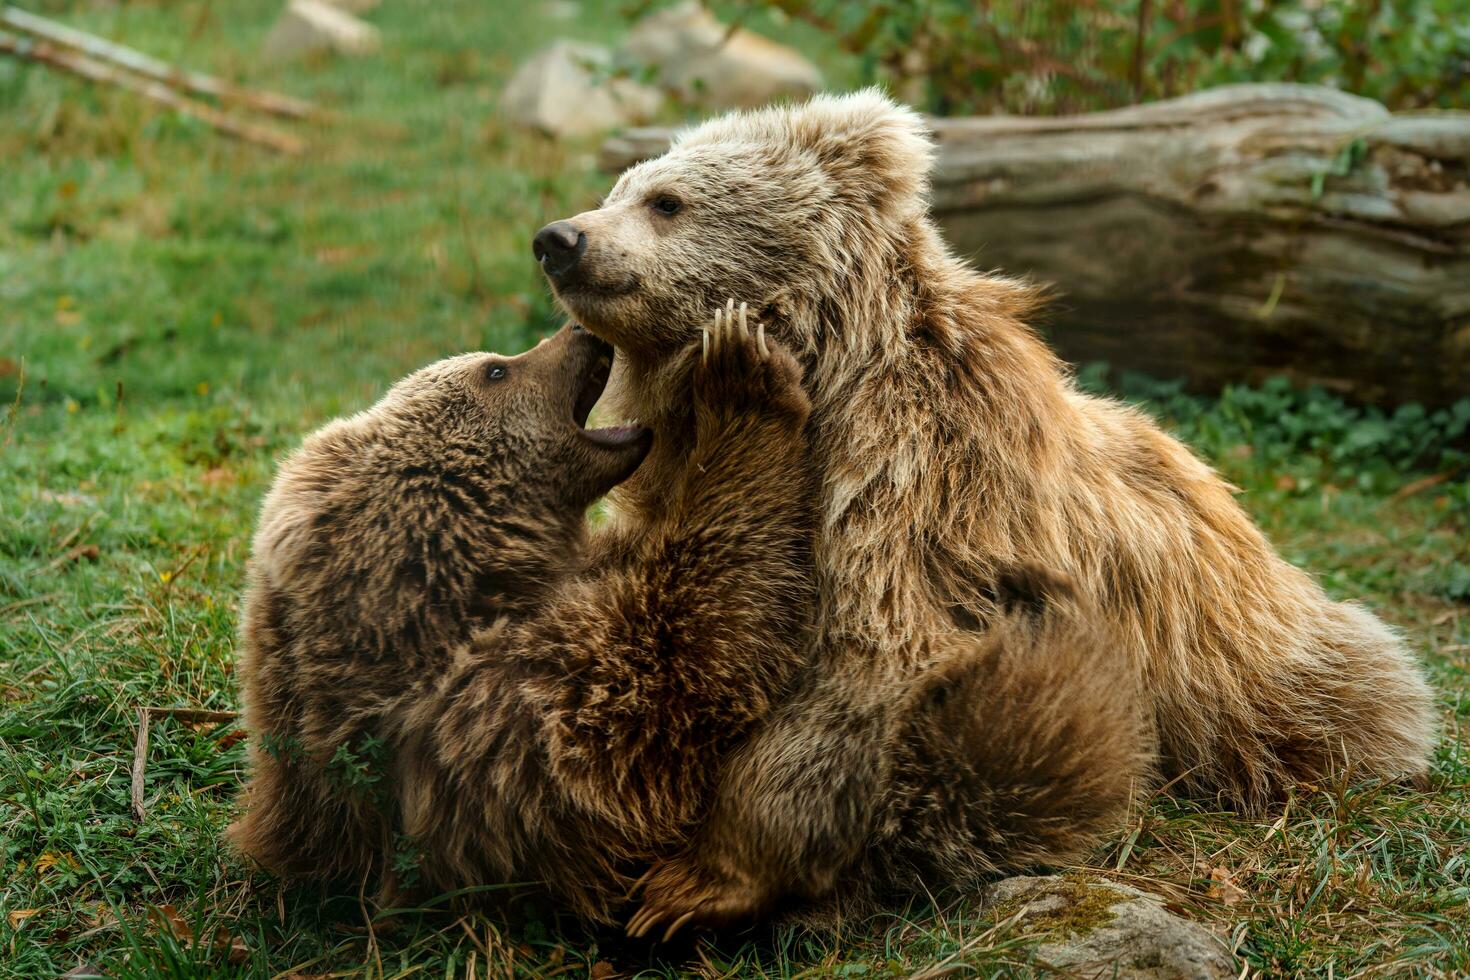 himalaya marrón oso en zoo foto